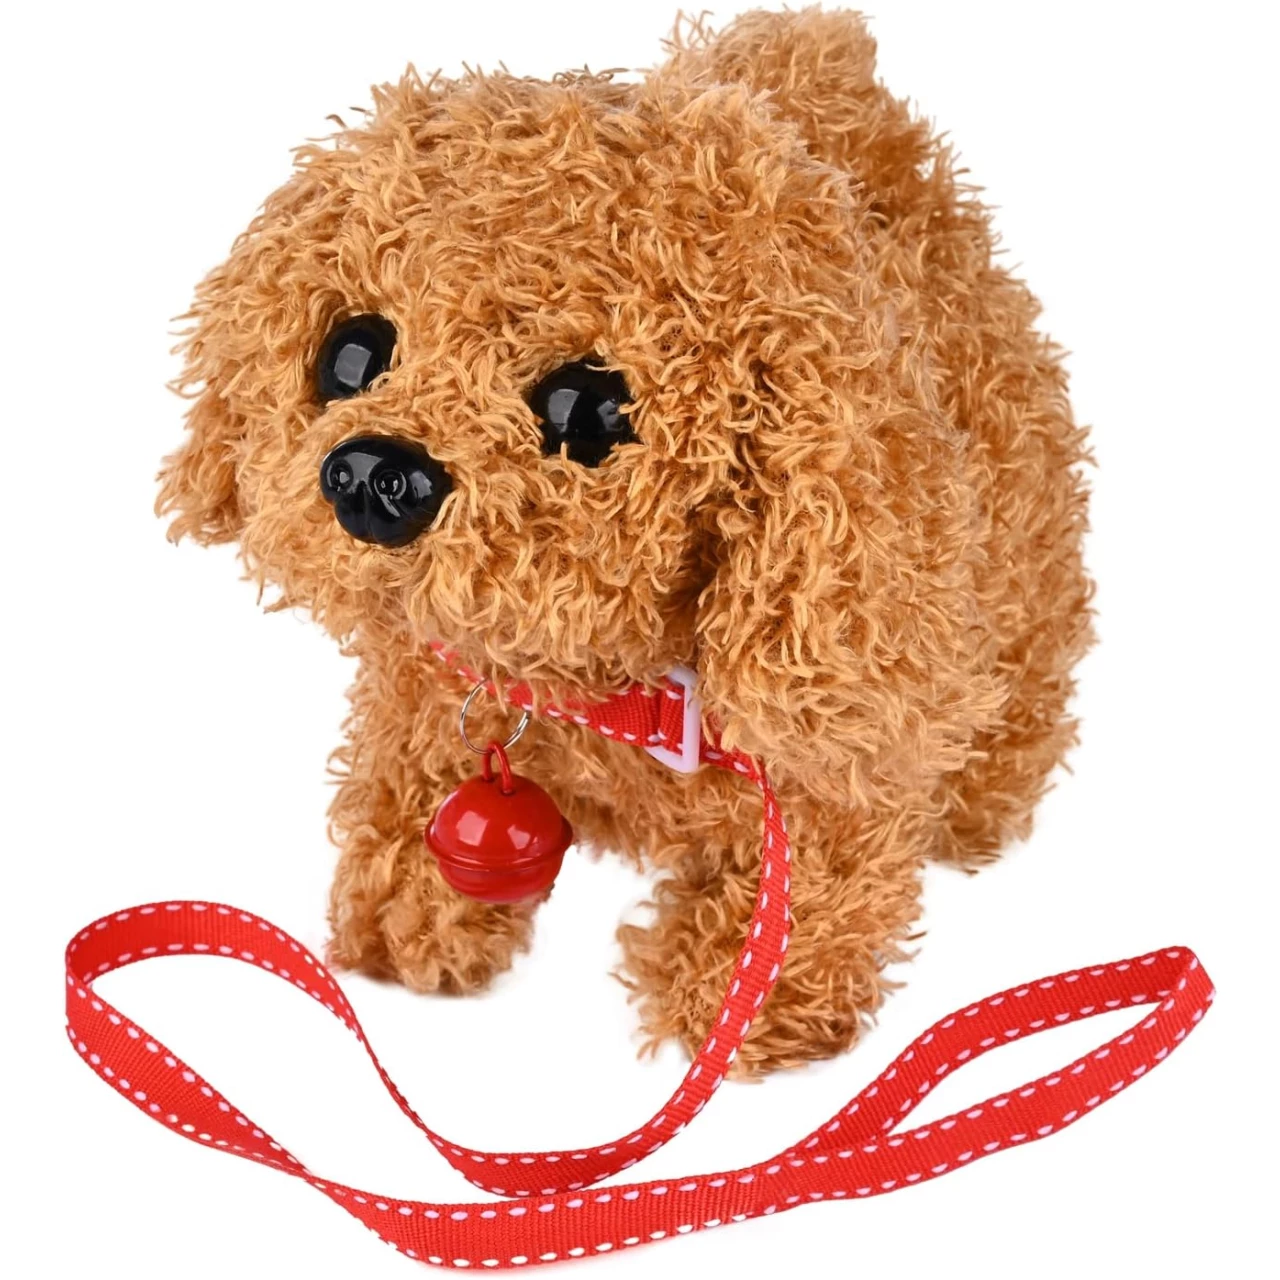 WorWoder Plush Teddy Toy Puppy Electronic Interactive Pet Dog - Walking, Barking, Tail Wagging, Stretching Companion Animal for Kids Children (Teddy Dog)